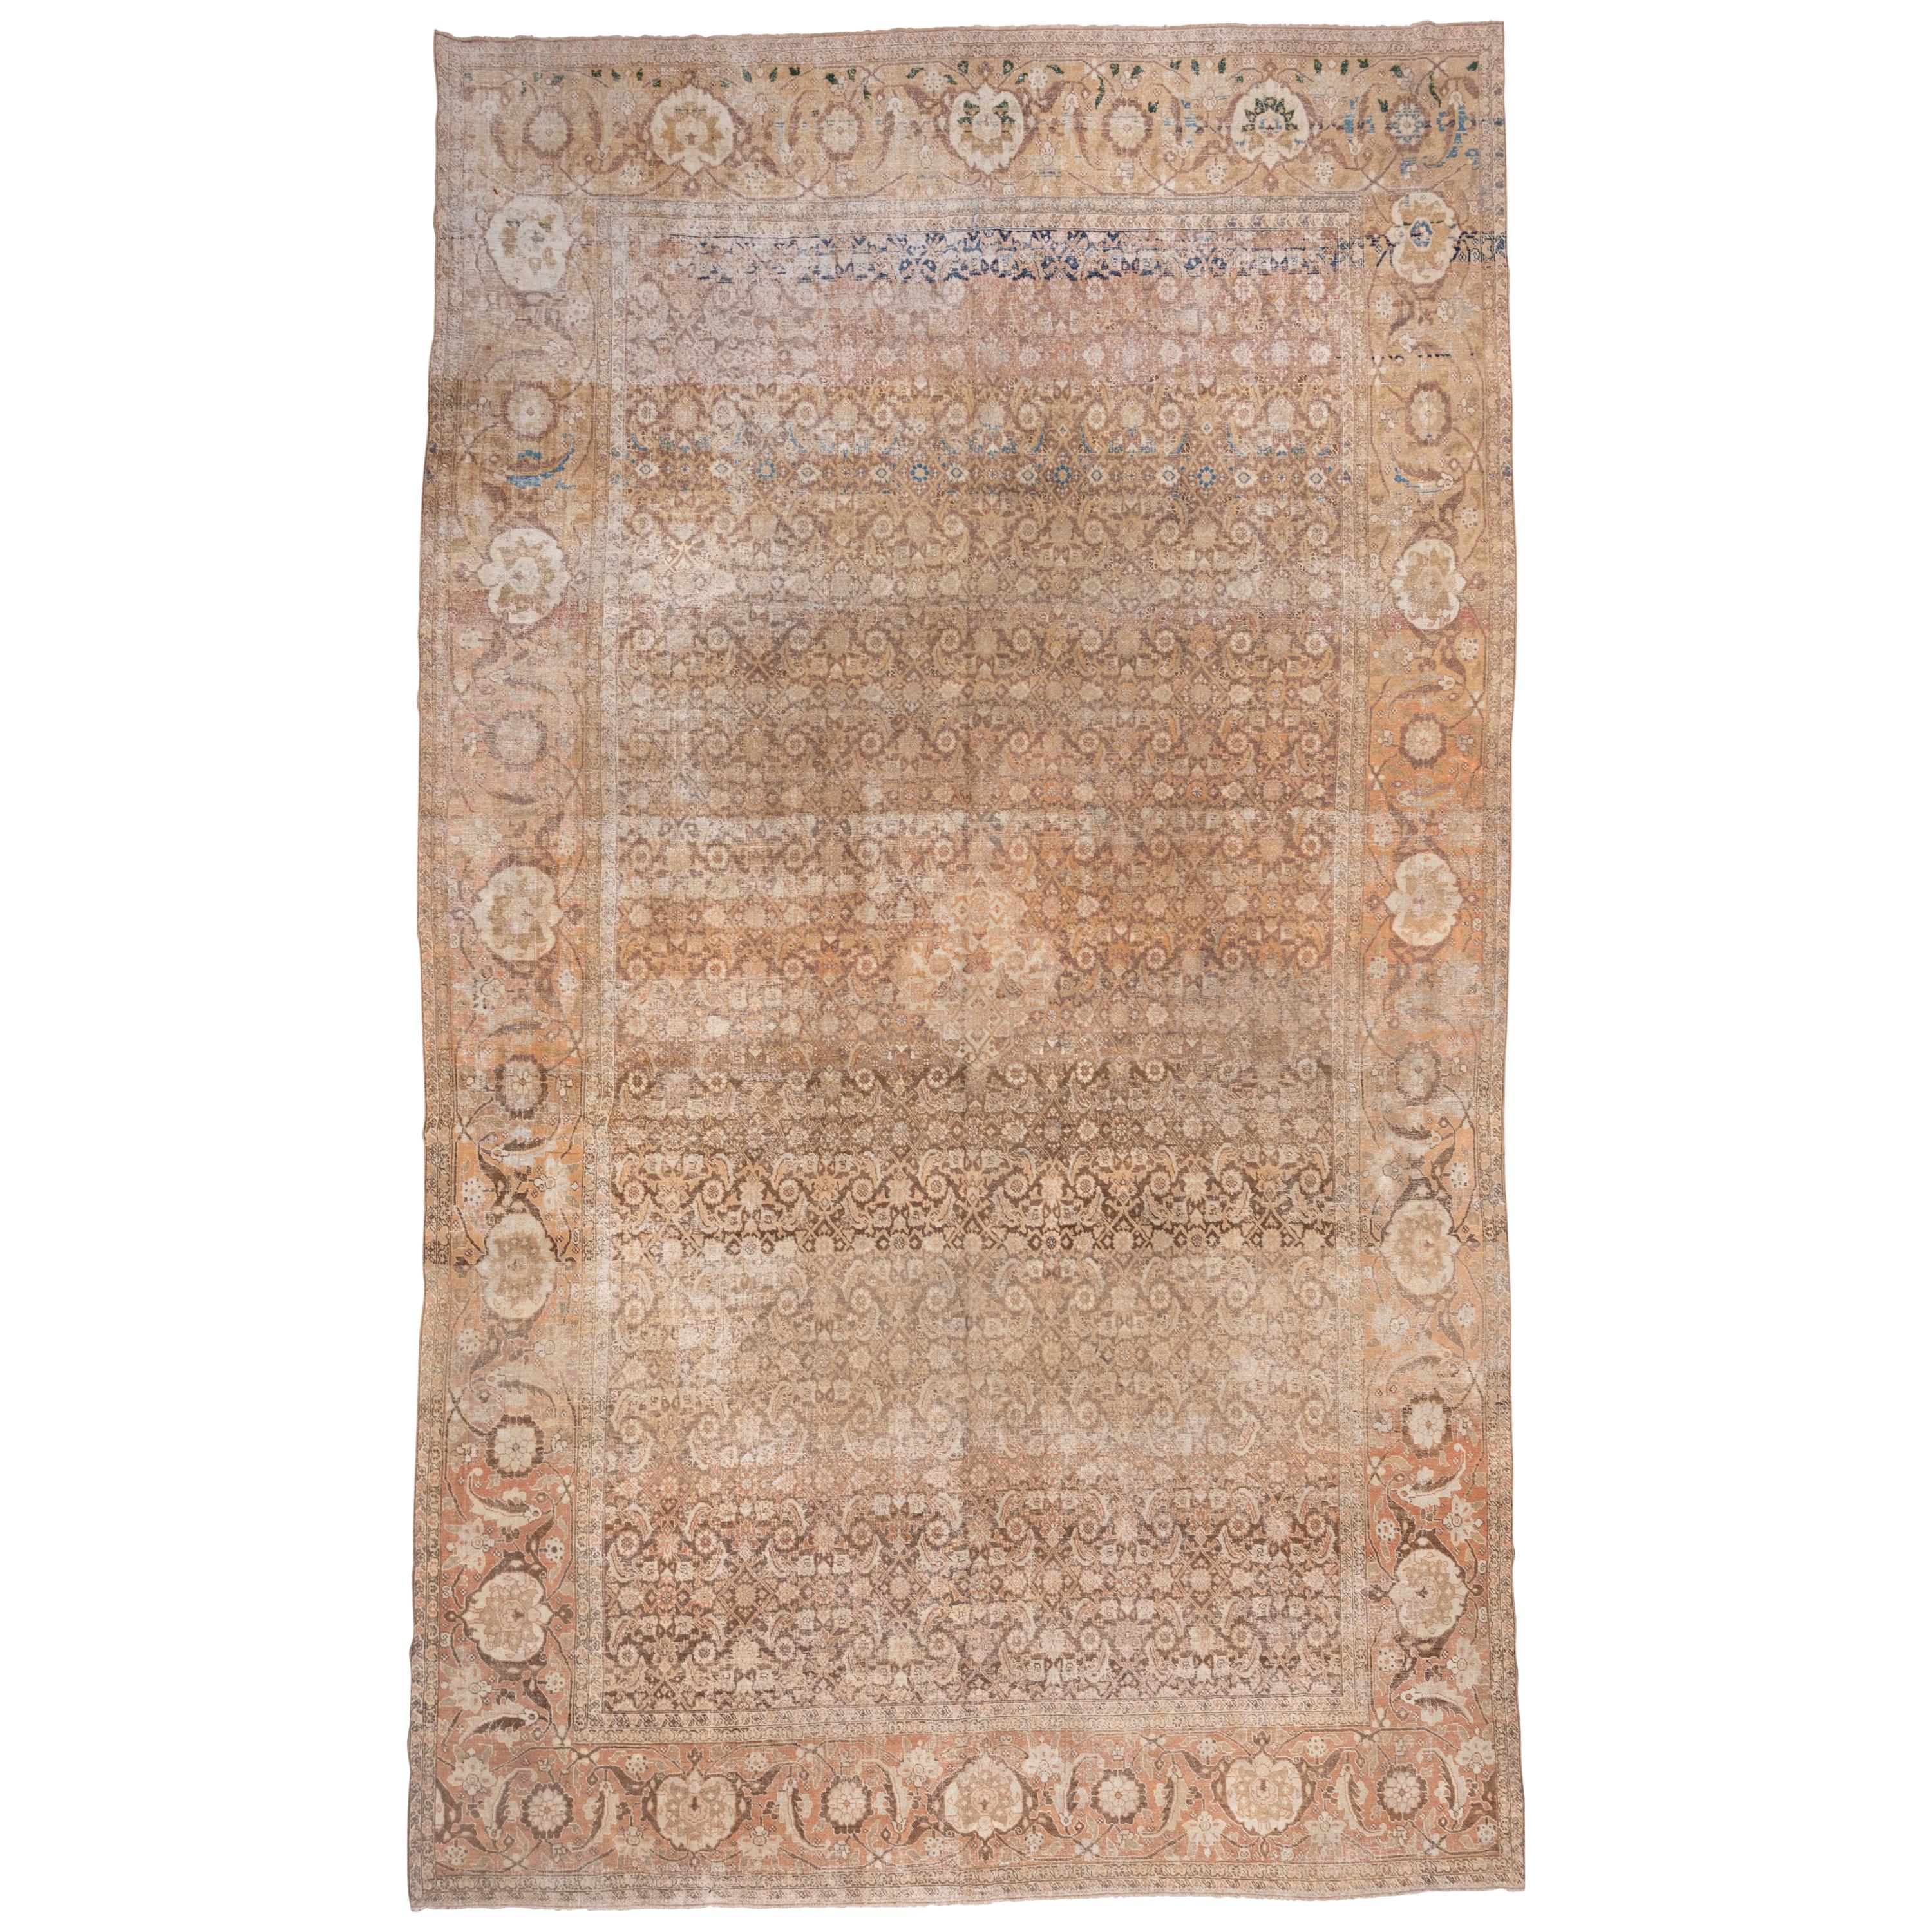 Antique Large Persian Tabriz Carpet, circa 1920s